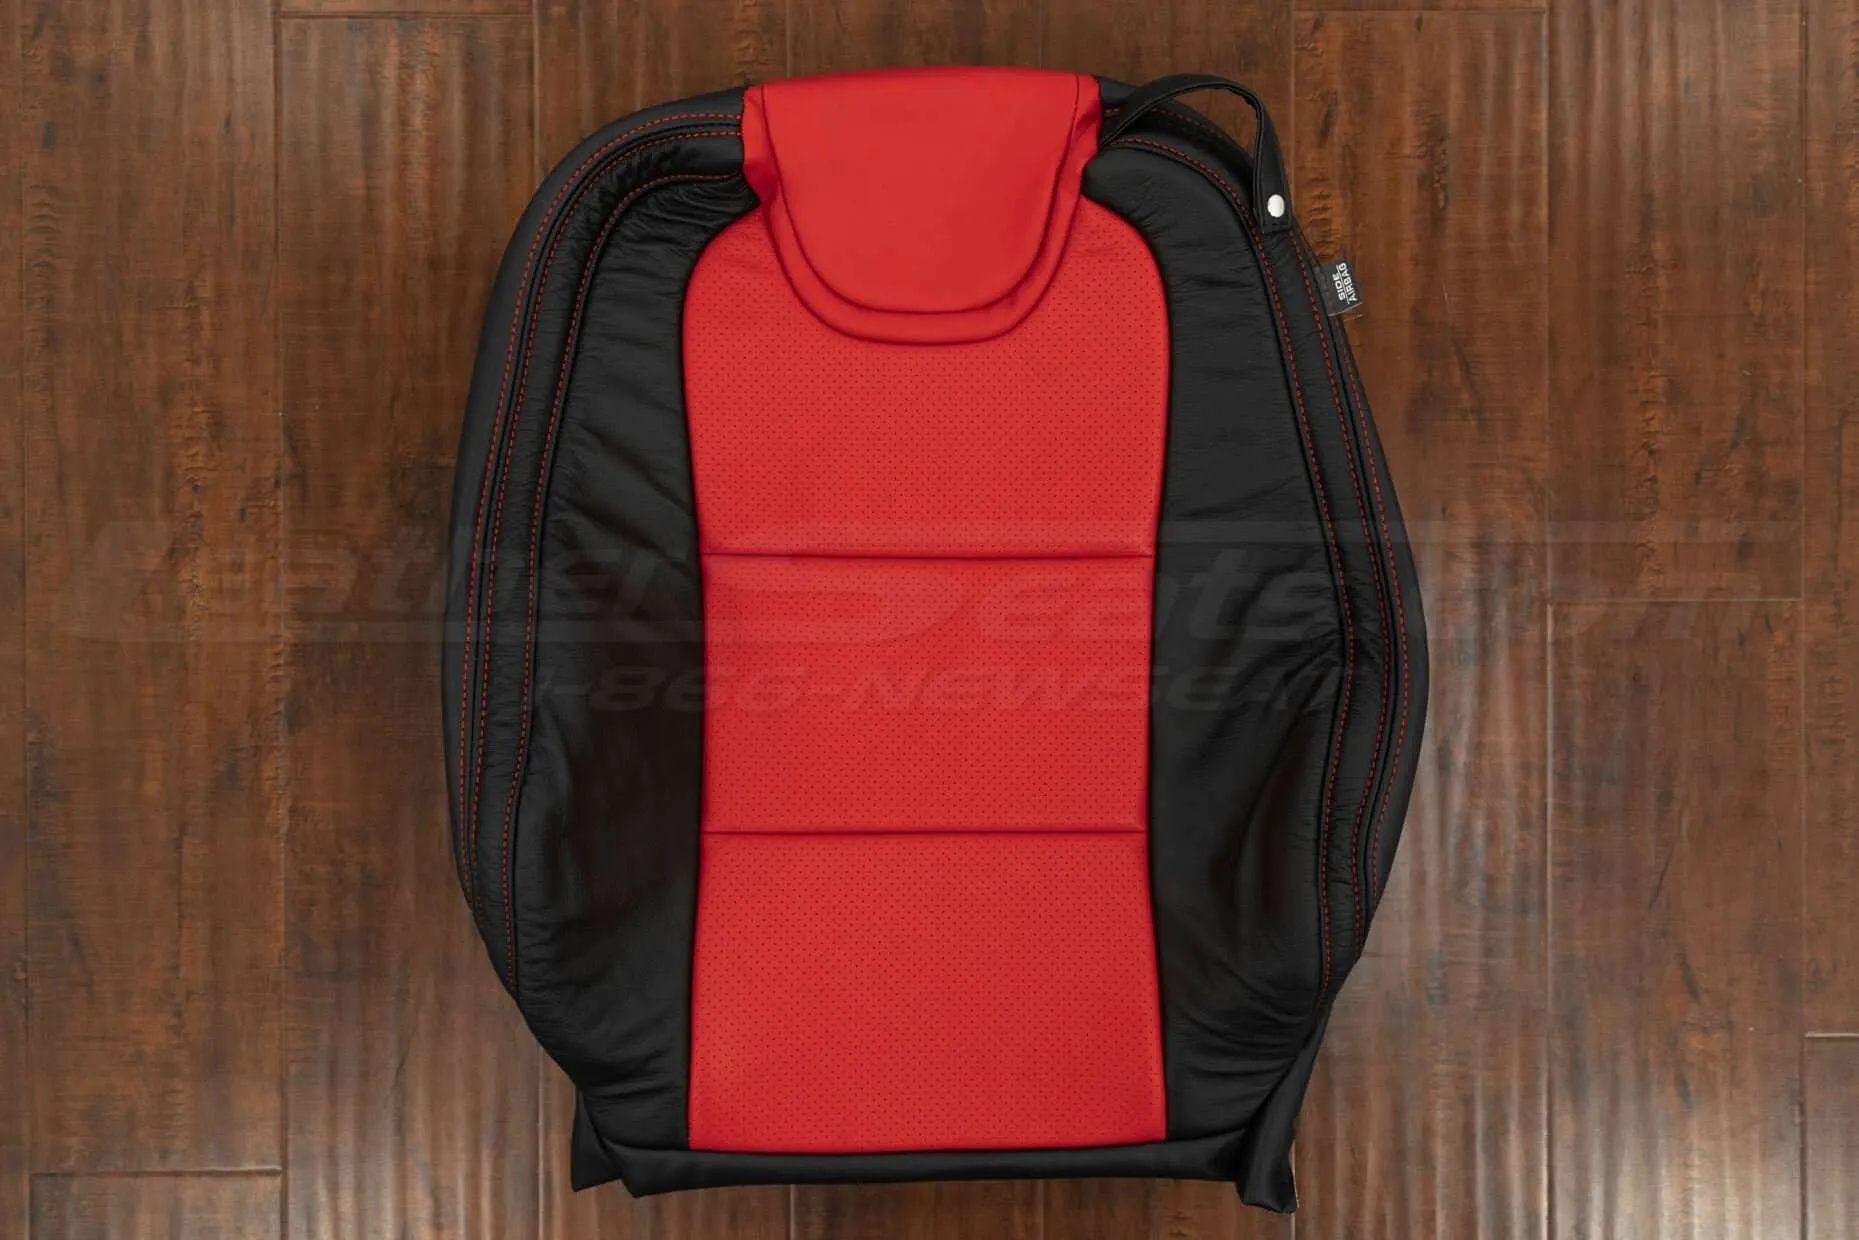 Chevrolet Camaro Leather Kit - Black & Bright Red - Front backrest